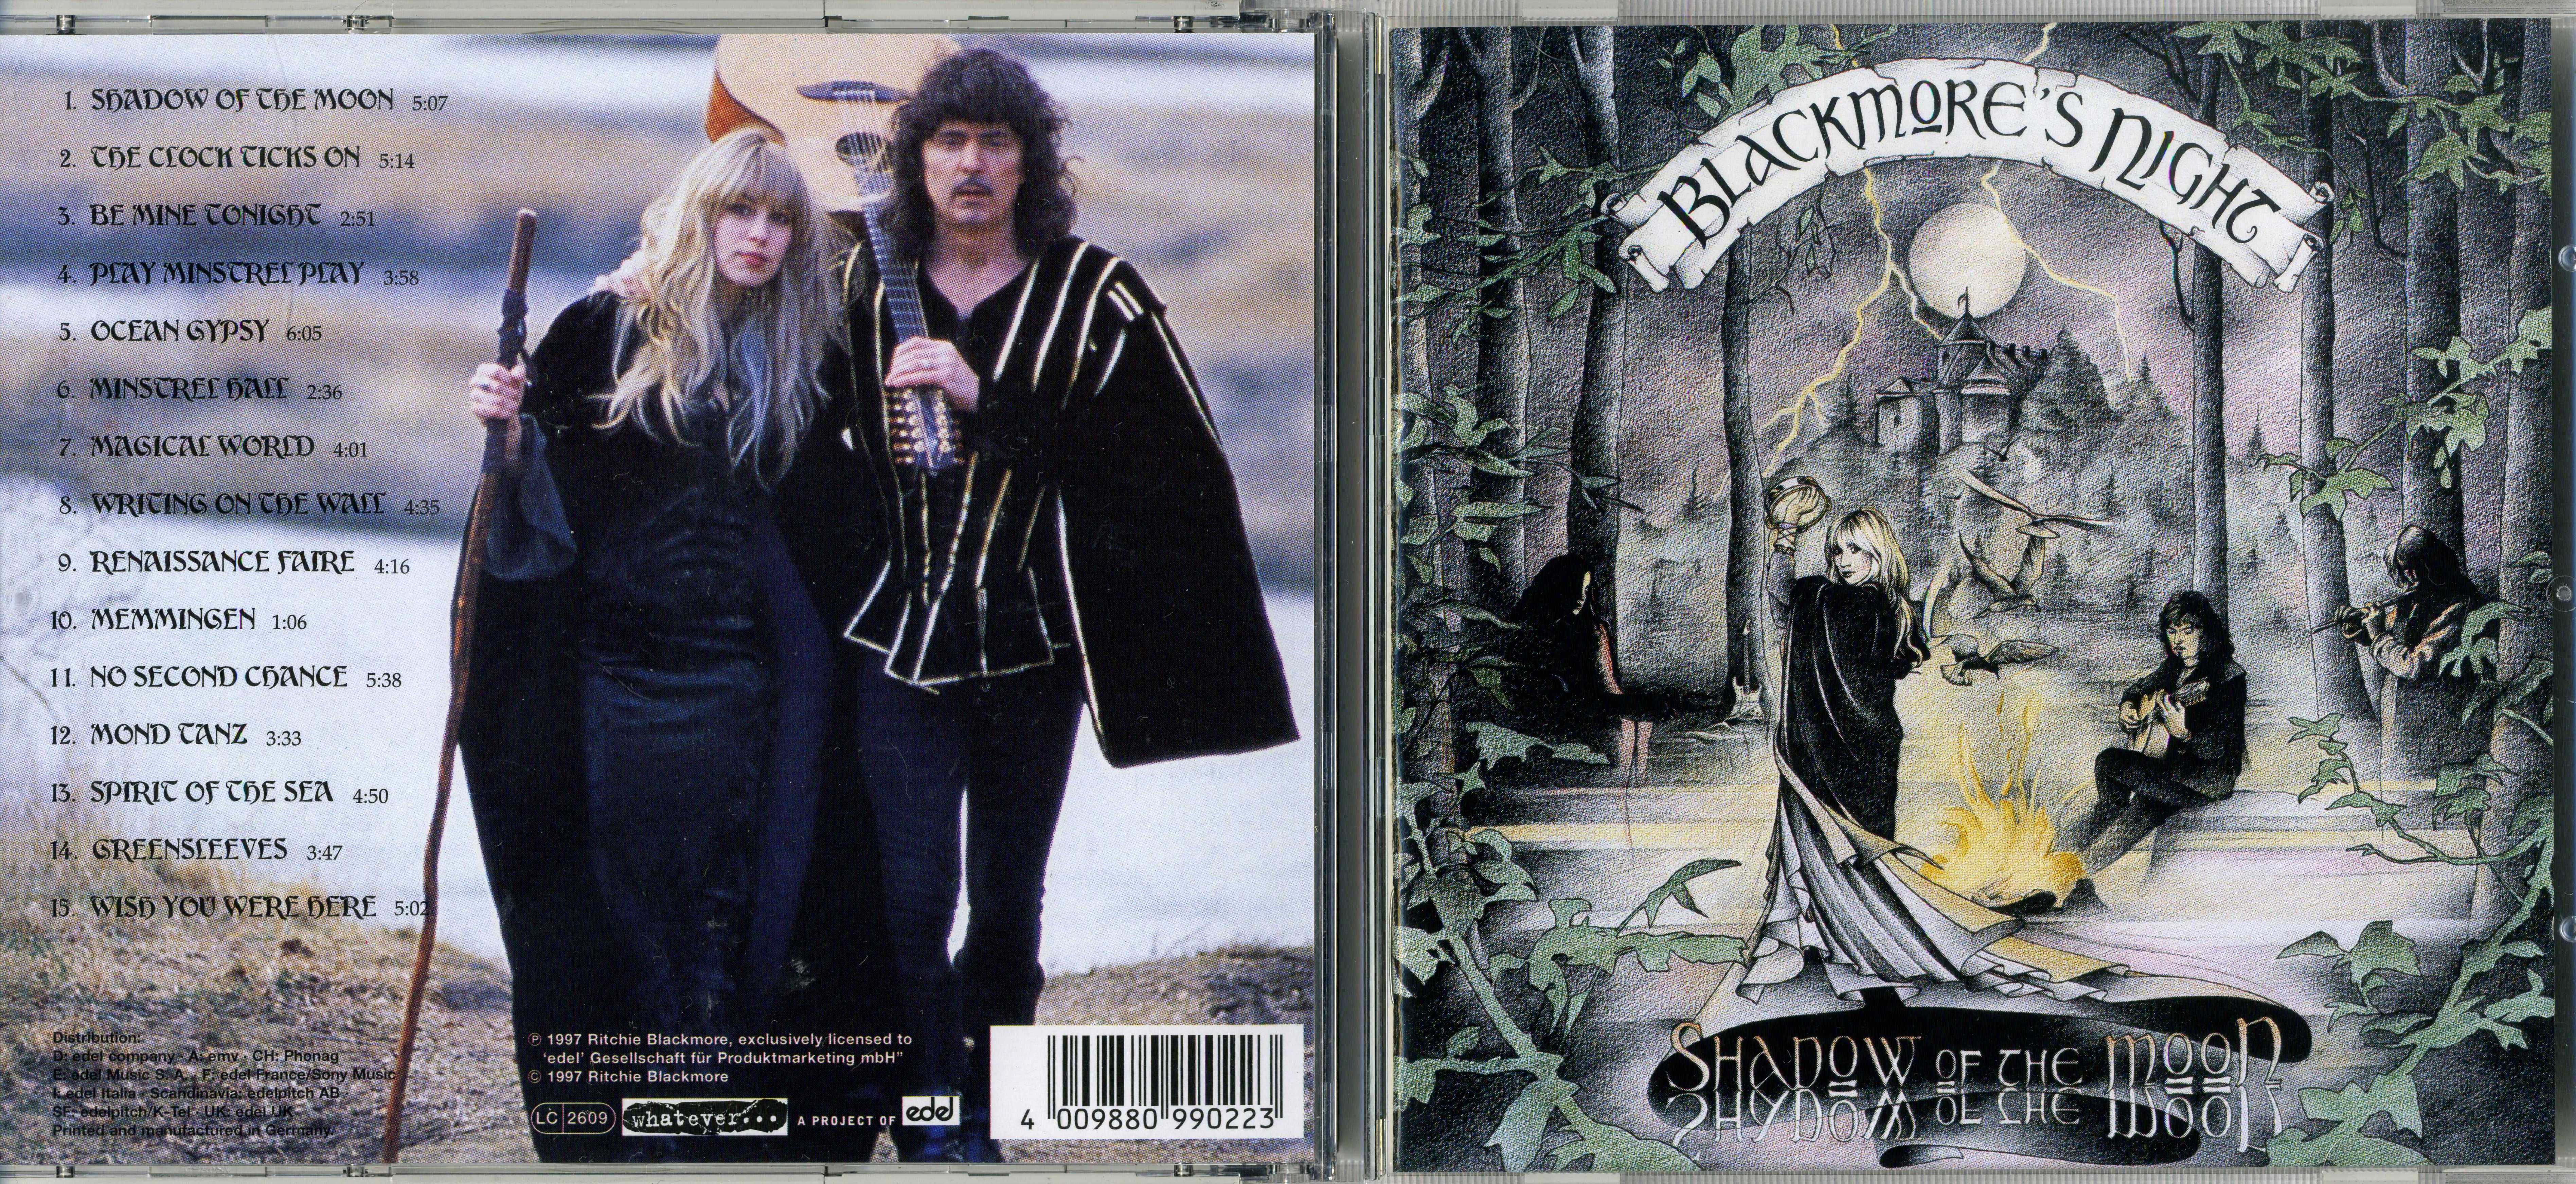 Blackmores night shadow of the moon. Blackmore's Night Shadow of the Moon 1997. Blackmore's Night 25 Anniversary. Blackmore's Night в Санкт Петербурге 2002. Blackmores Night Shadow of the Moon 25th Anniversary.